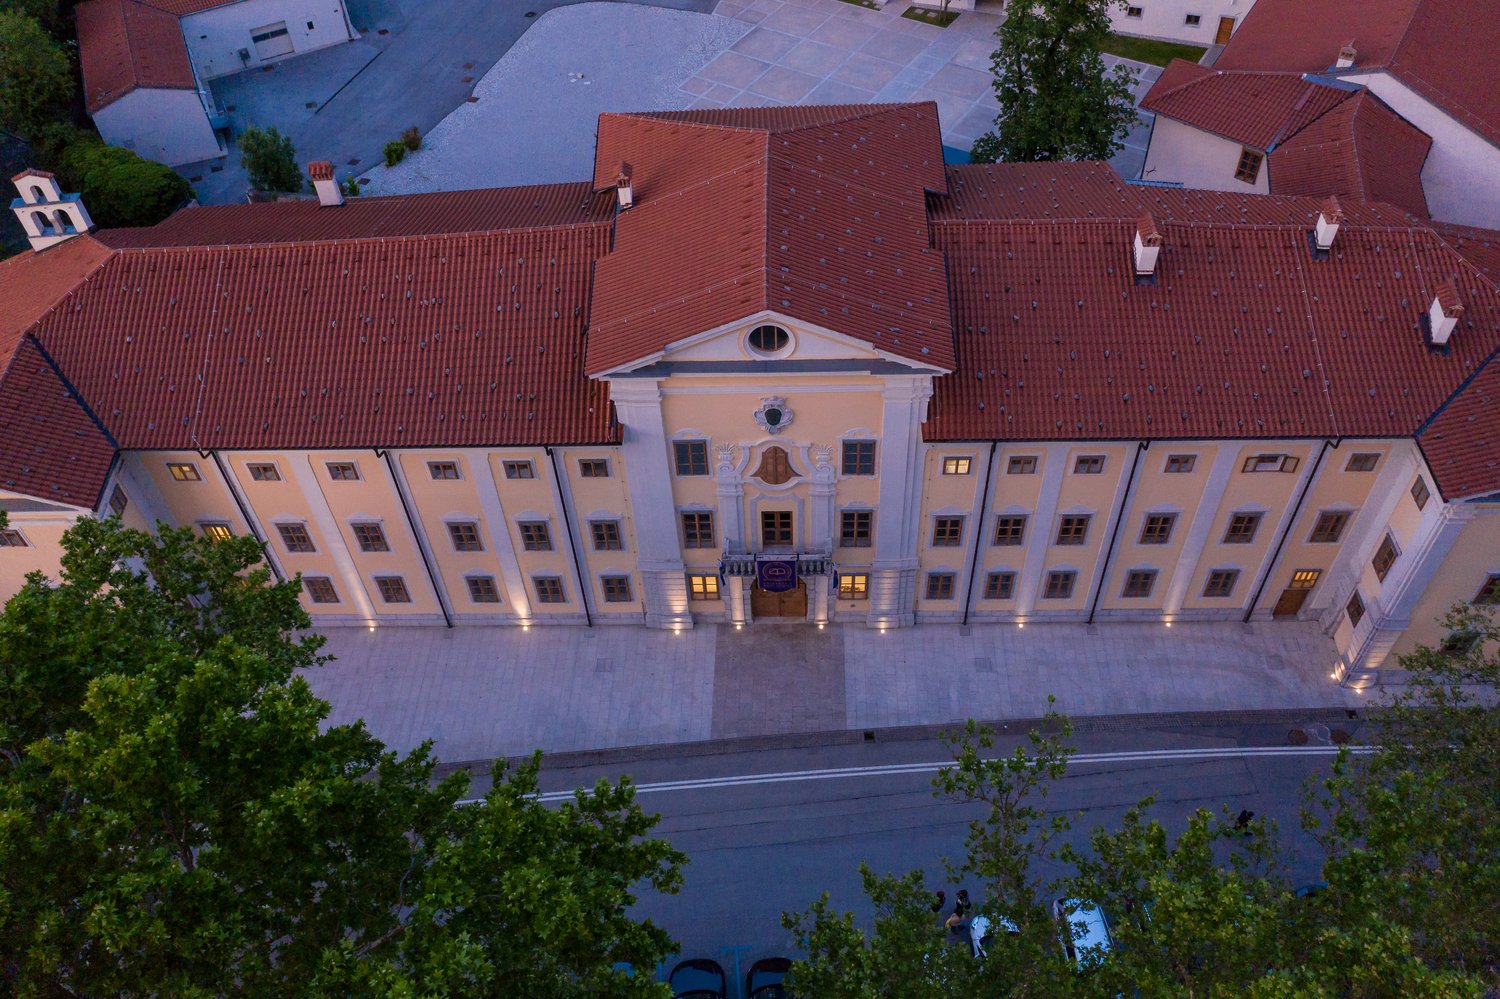 University of Nova Gorica